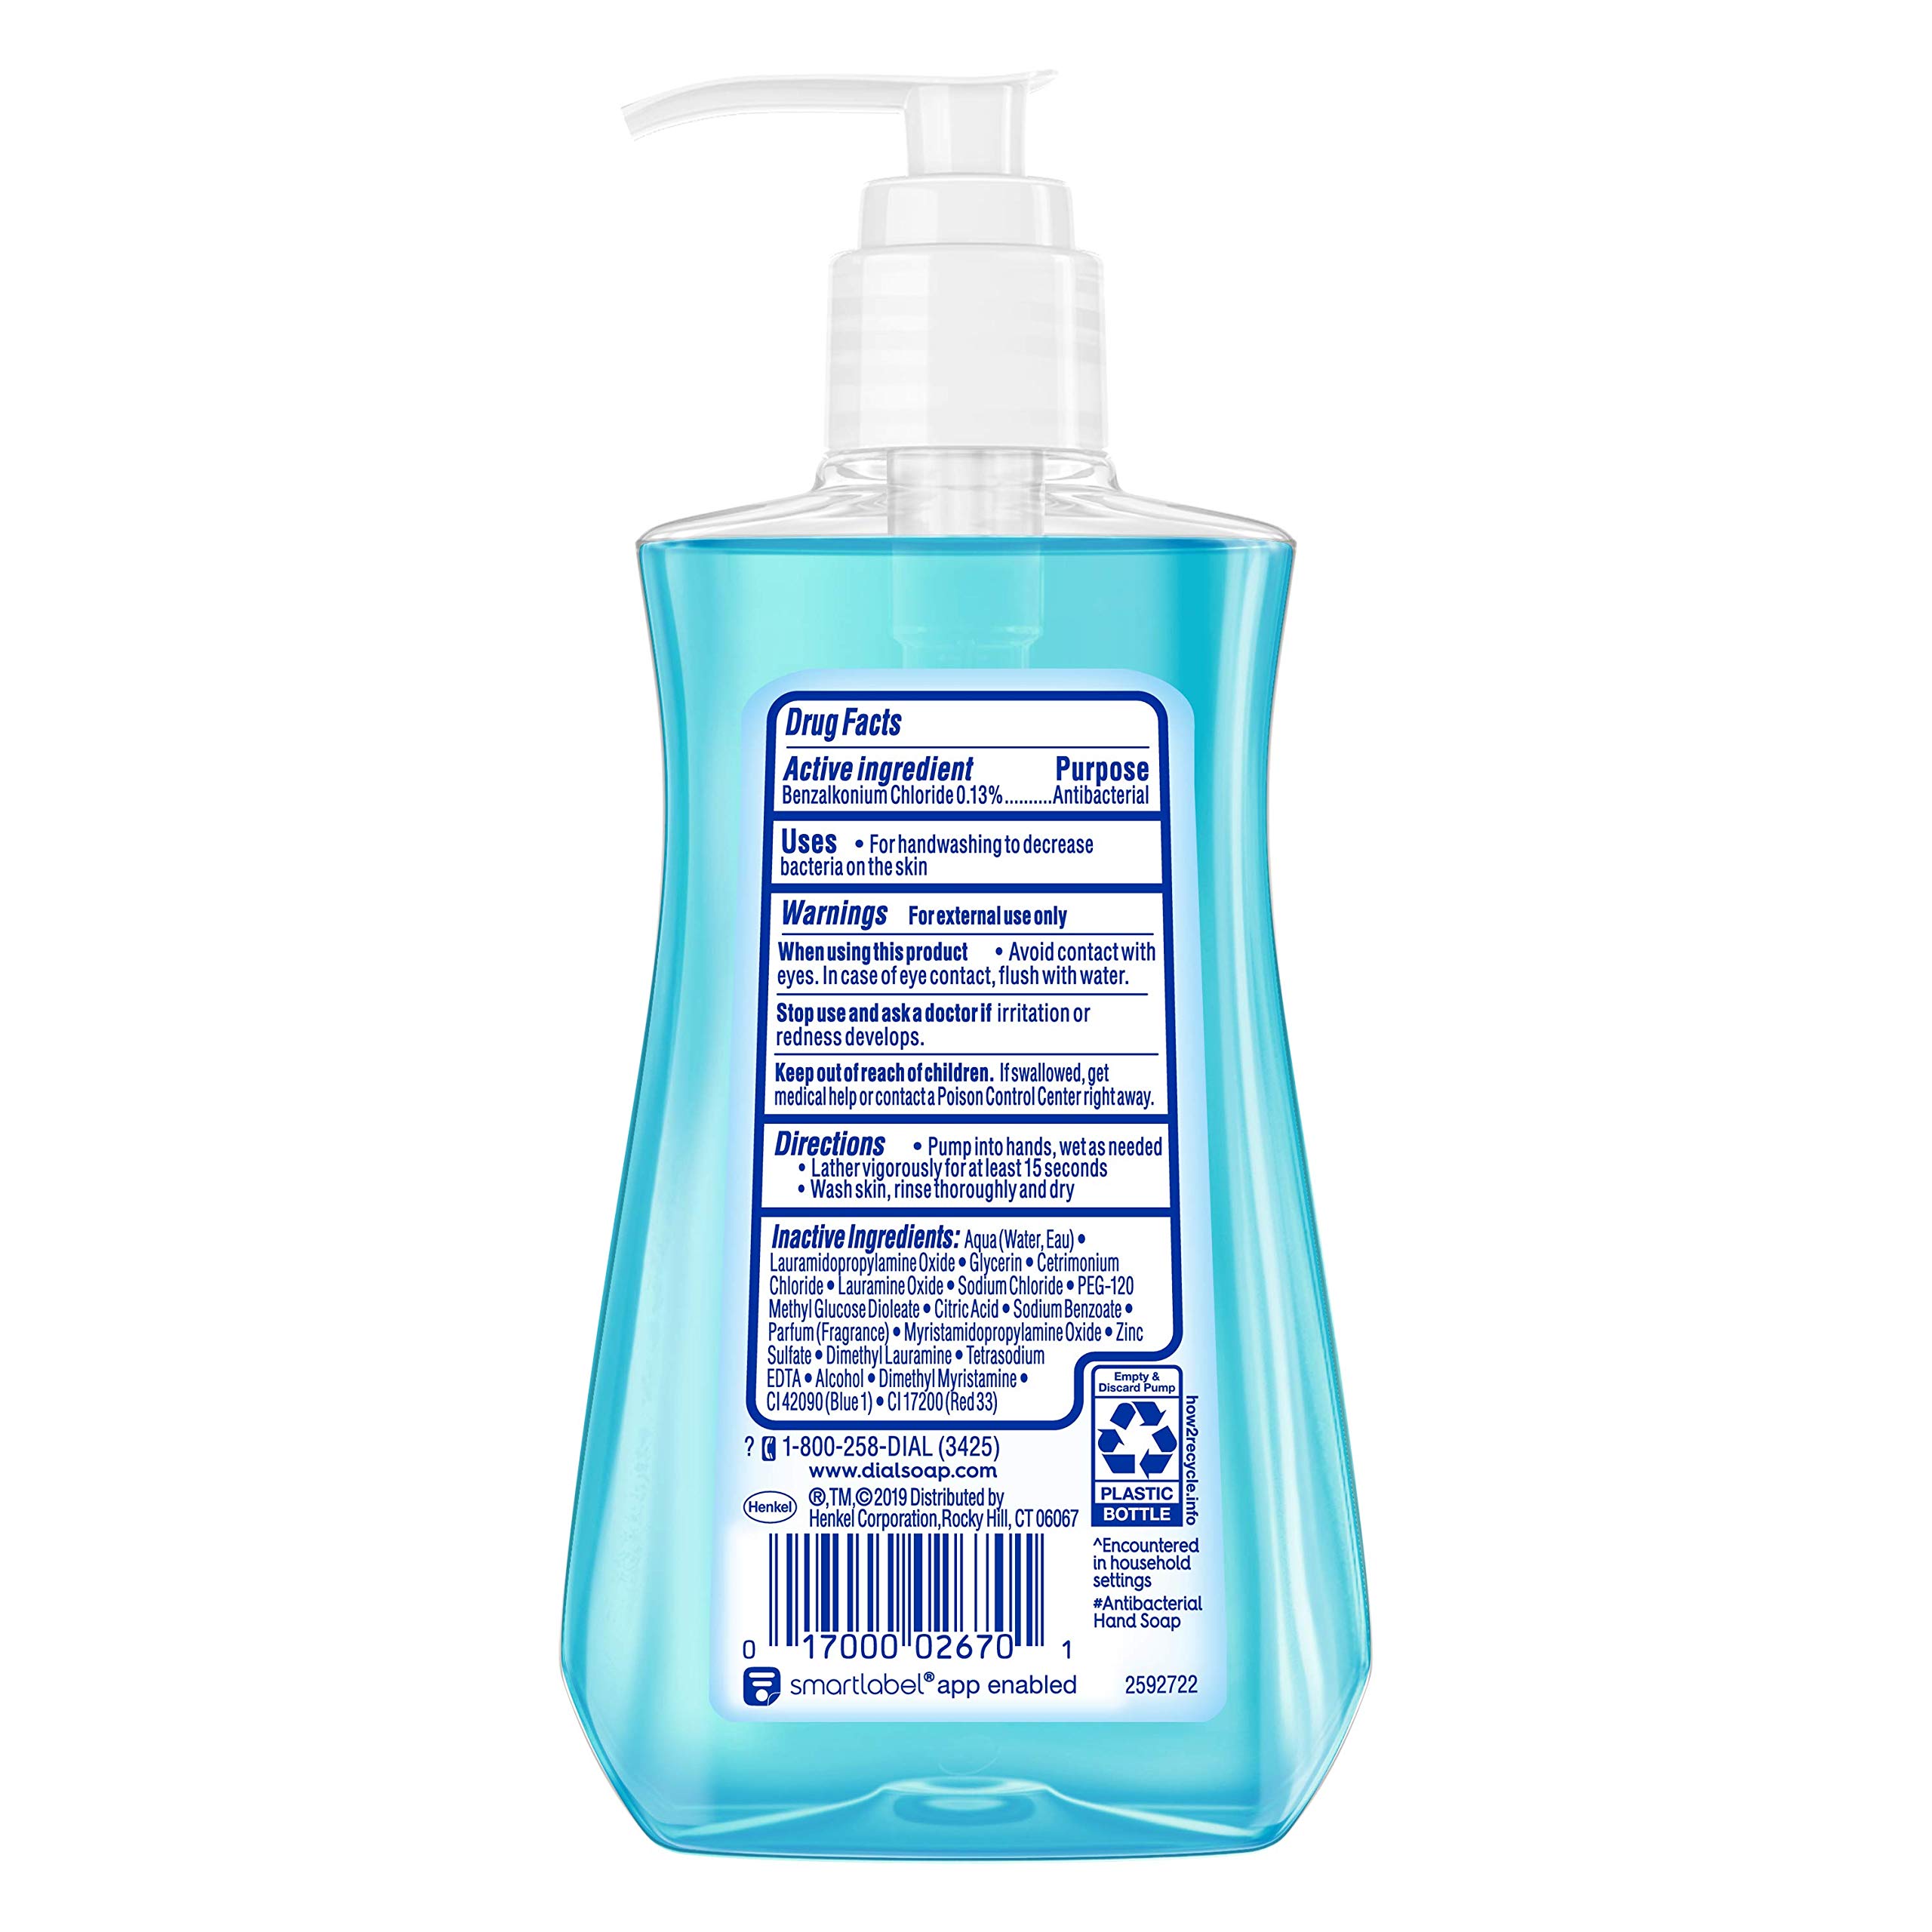 Dial Complete Antibacterial Liquid Hand Soap, Spring Water, 7.5 fl oz (Pack of 1)